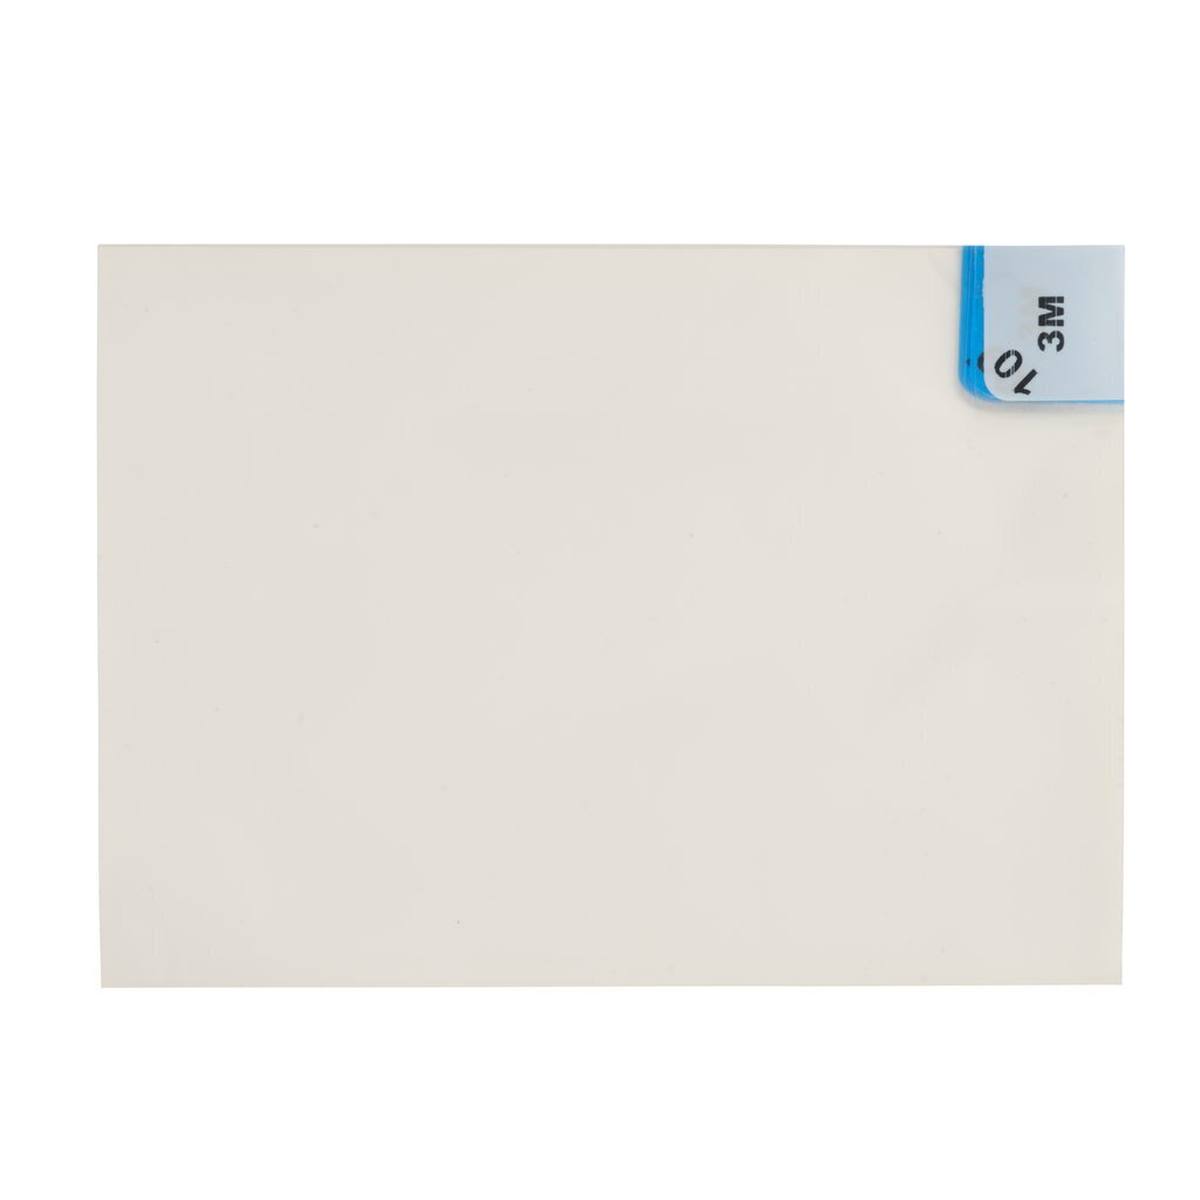 3M 4300 Nomad fine dust adhesive mat, white, 0.9m x 0.45m, 40 transparent polyethylene layers